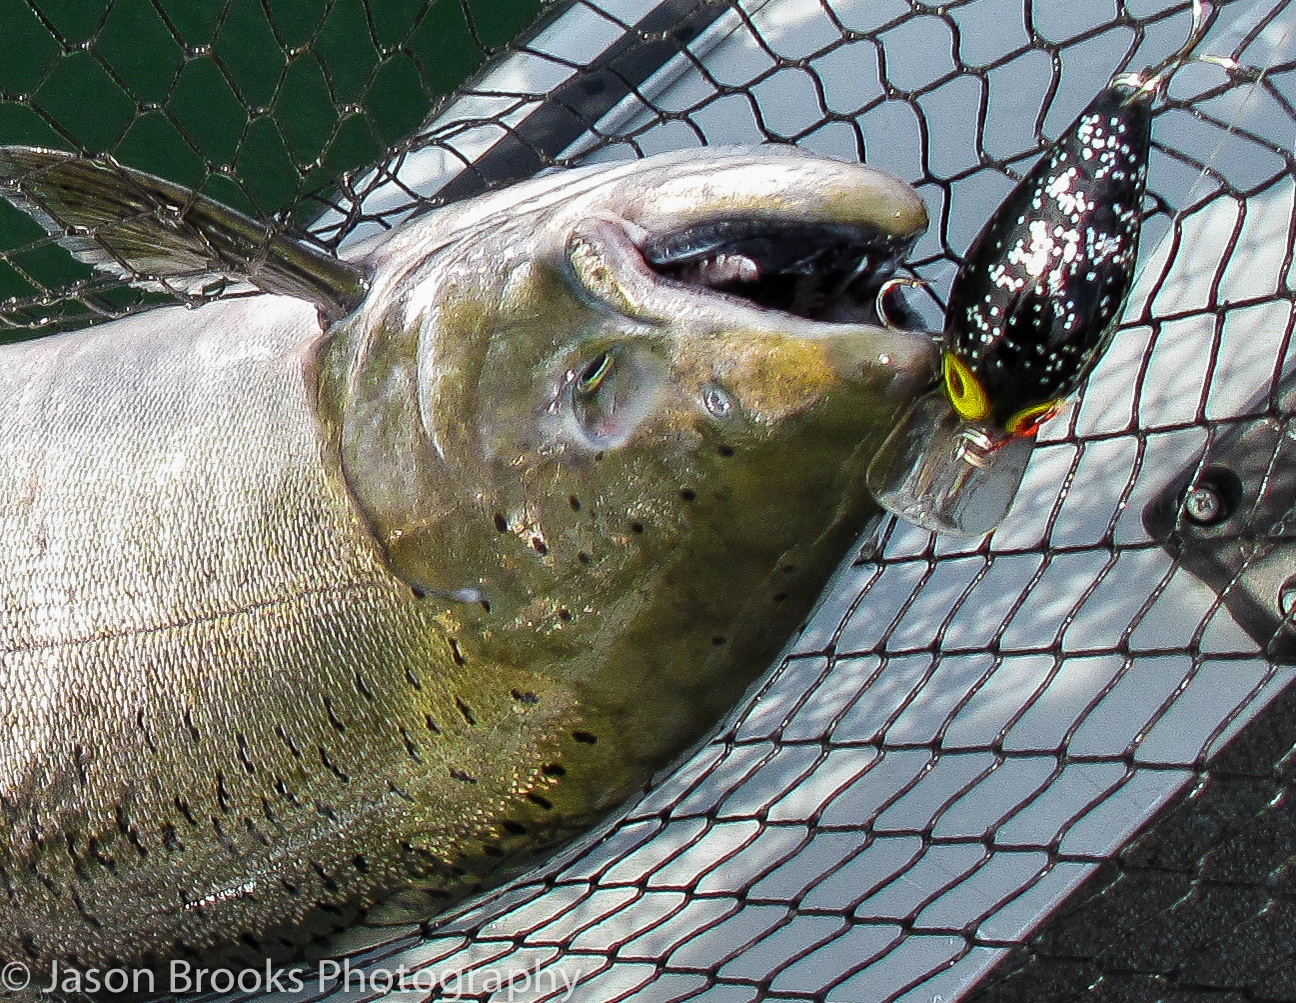 Steelhead/Salmon Bass Lures - NWFR